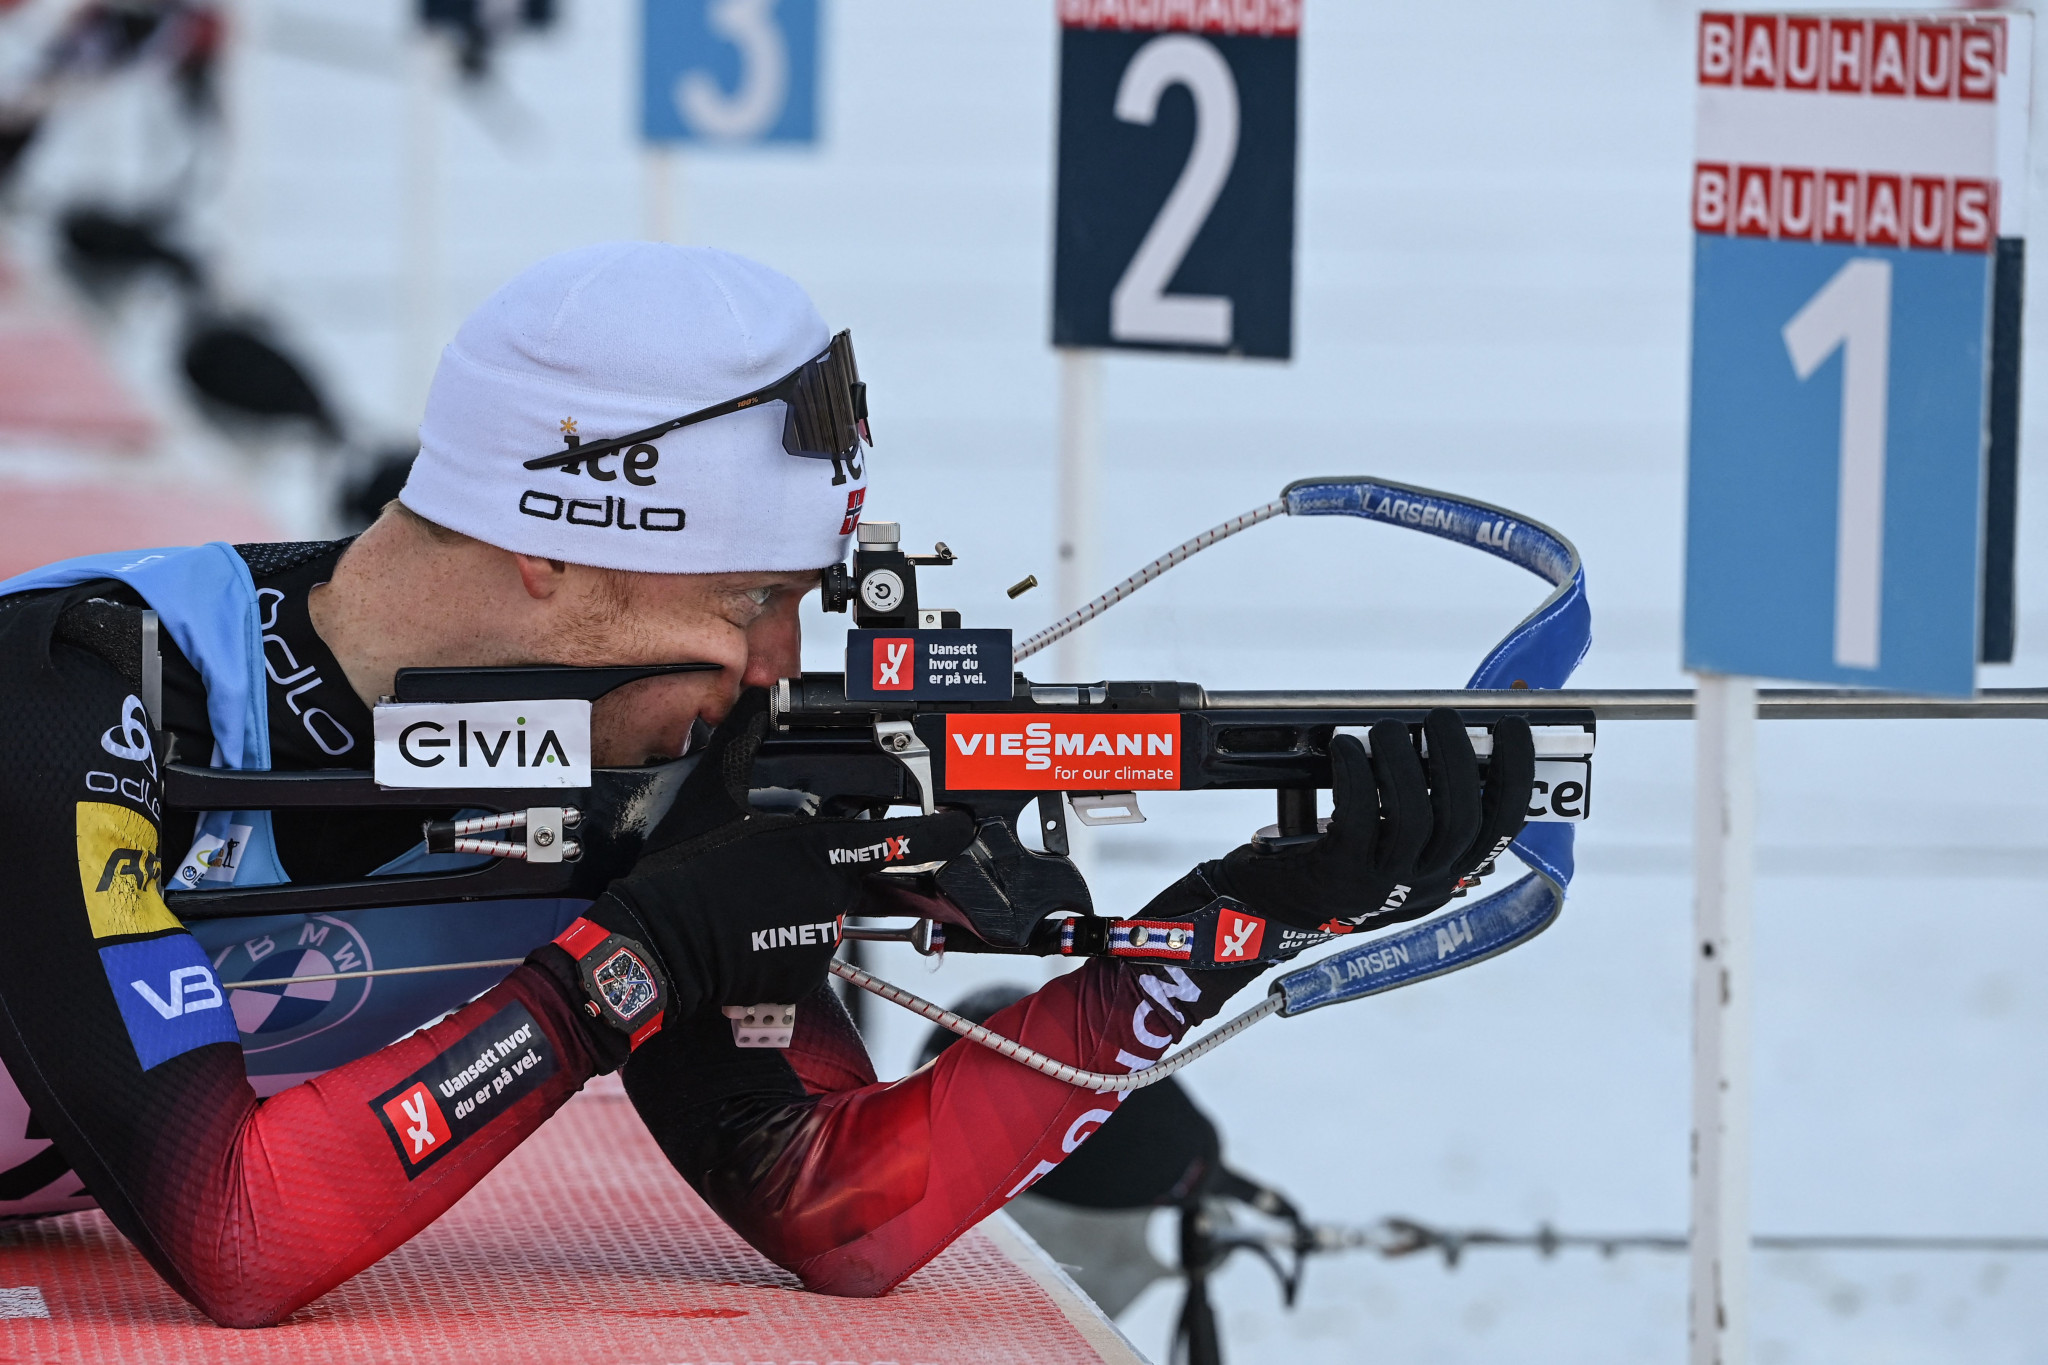 Defending Biathlon World Cup champion Bø breaks gold medal drought